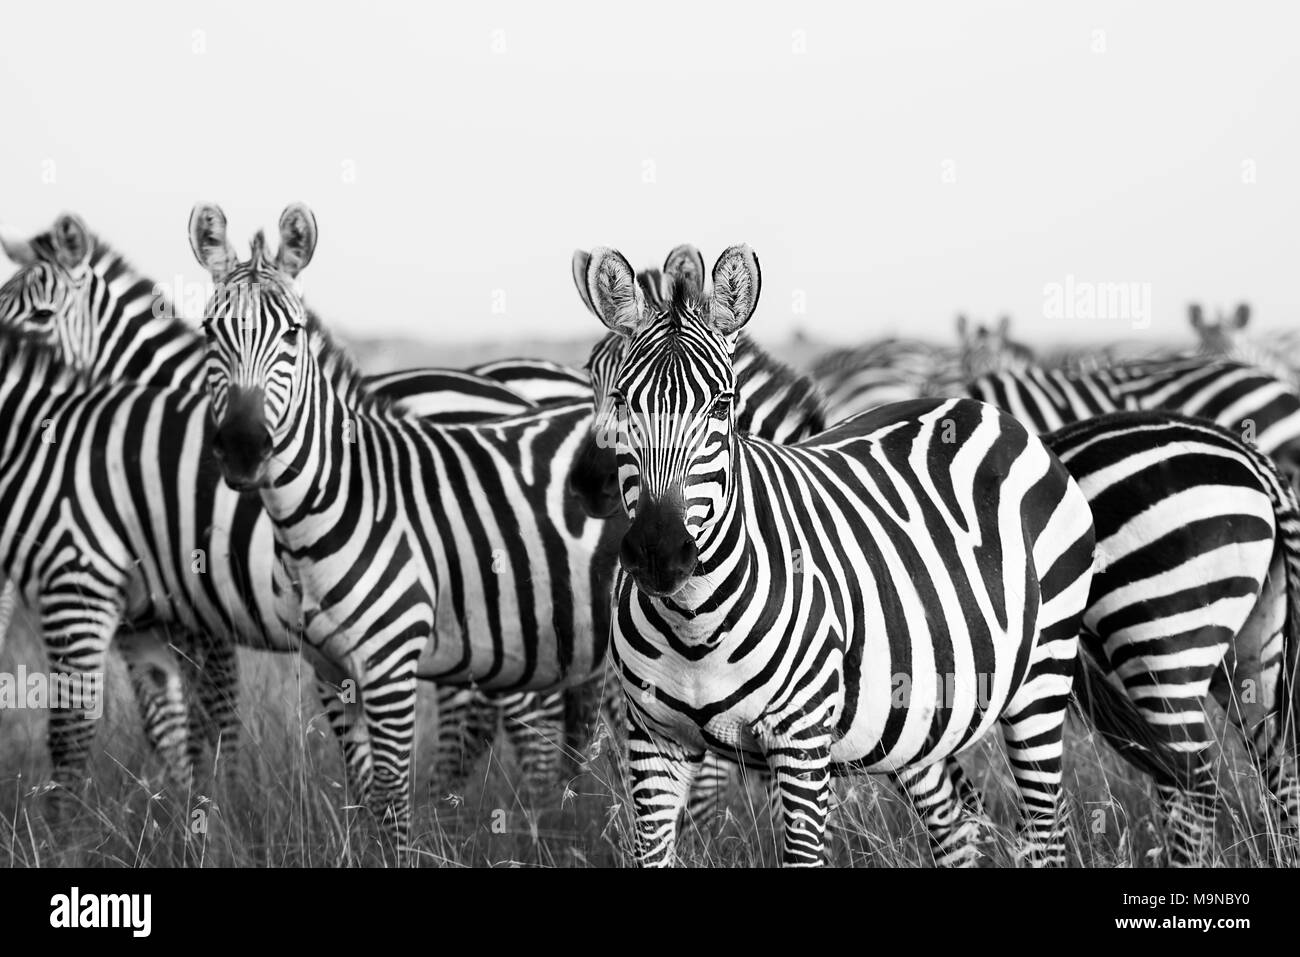 Black and White Zebras in Savannah Stock Photo